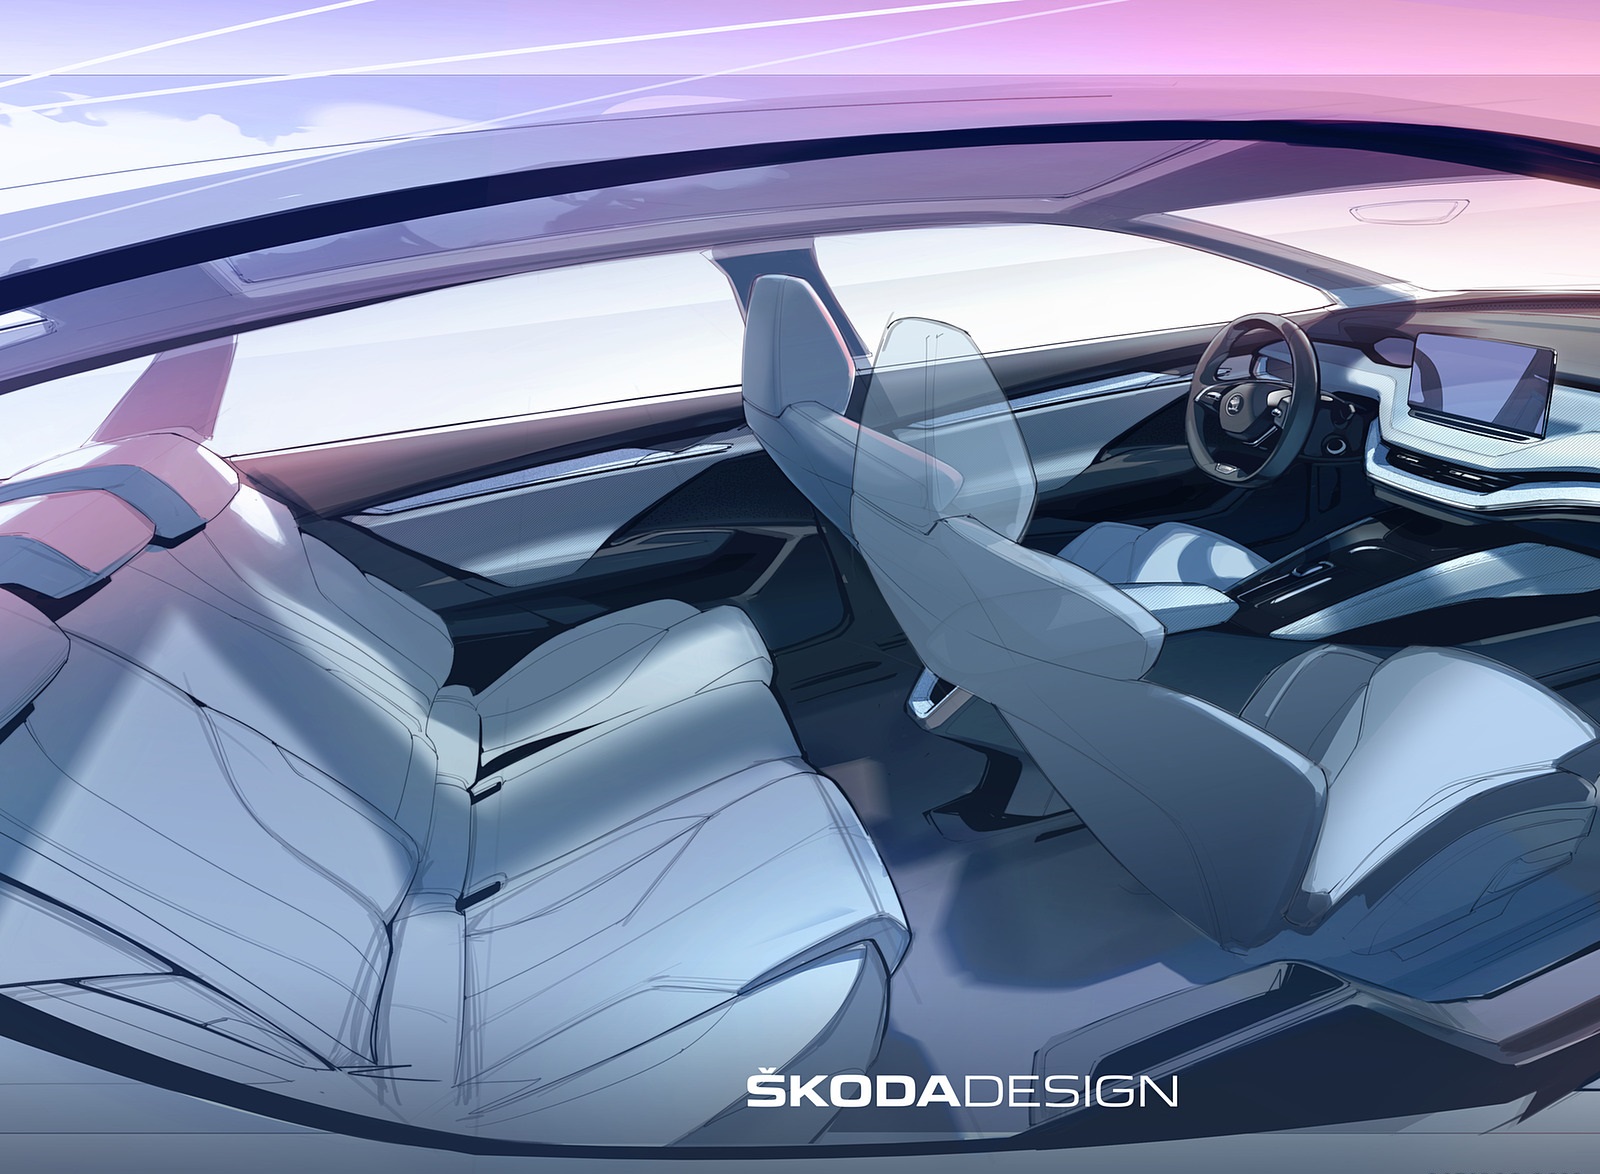 2021 Škoda ENYAQ iV Design Sketch Wallpapers #174 of 184